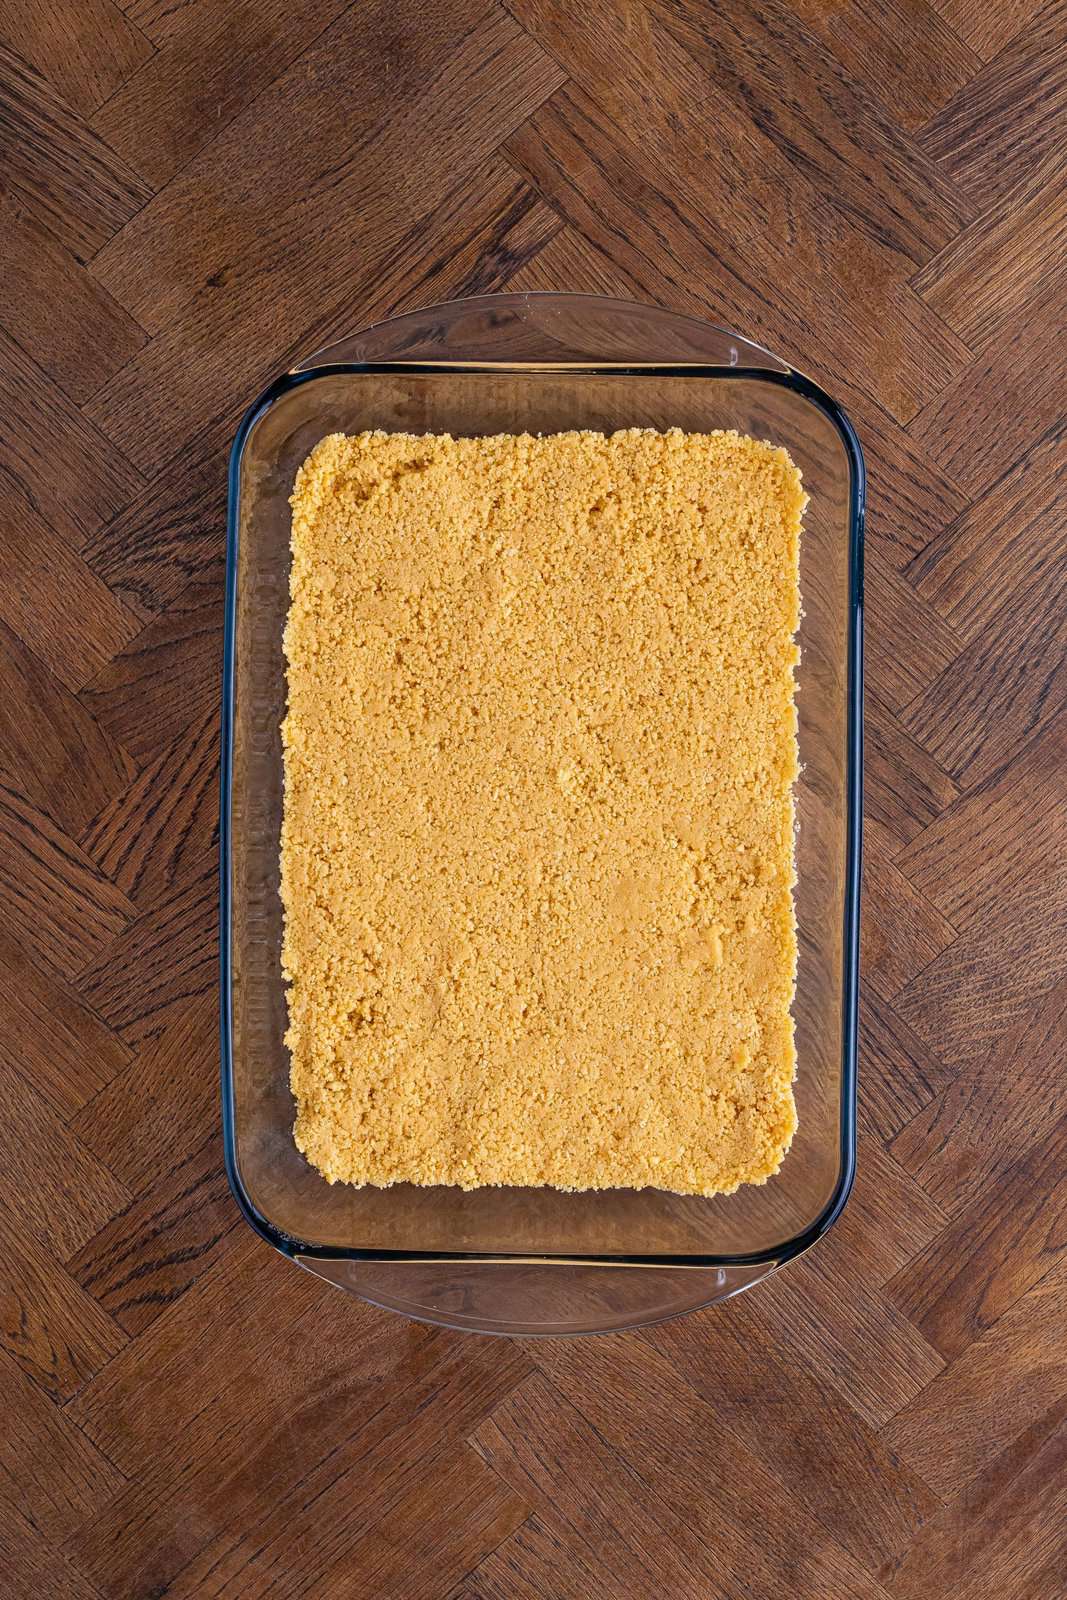 Golden Oreo crumb crust in a baking dish.